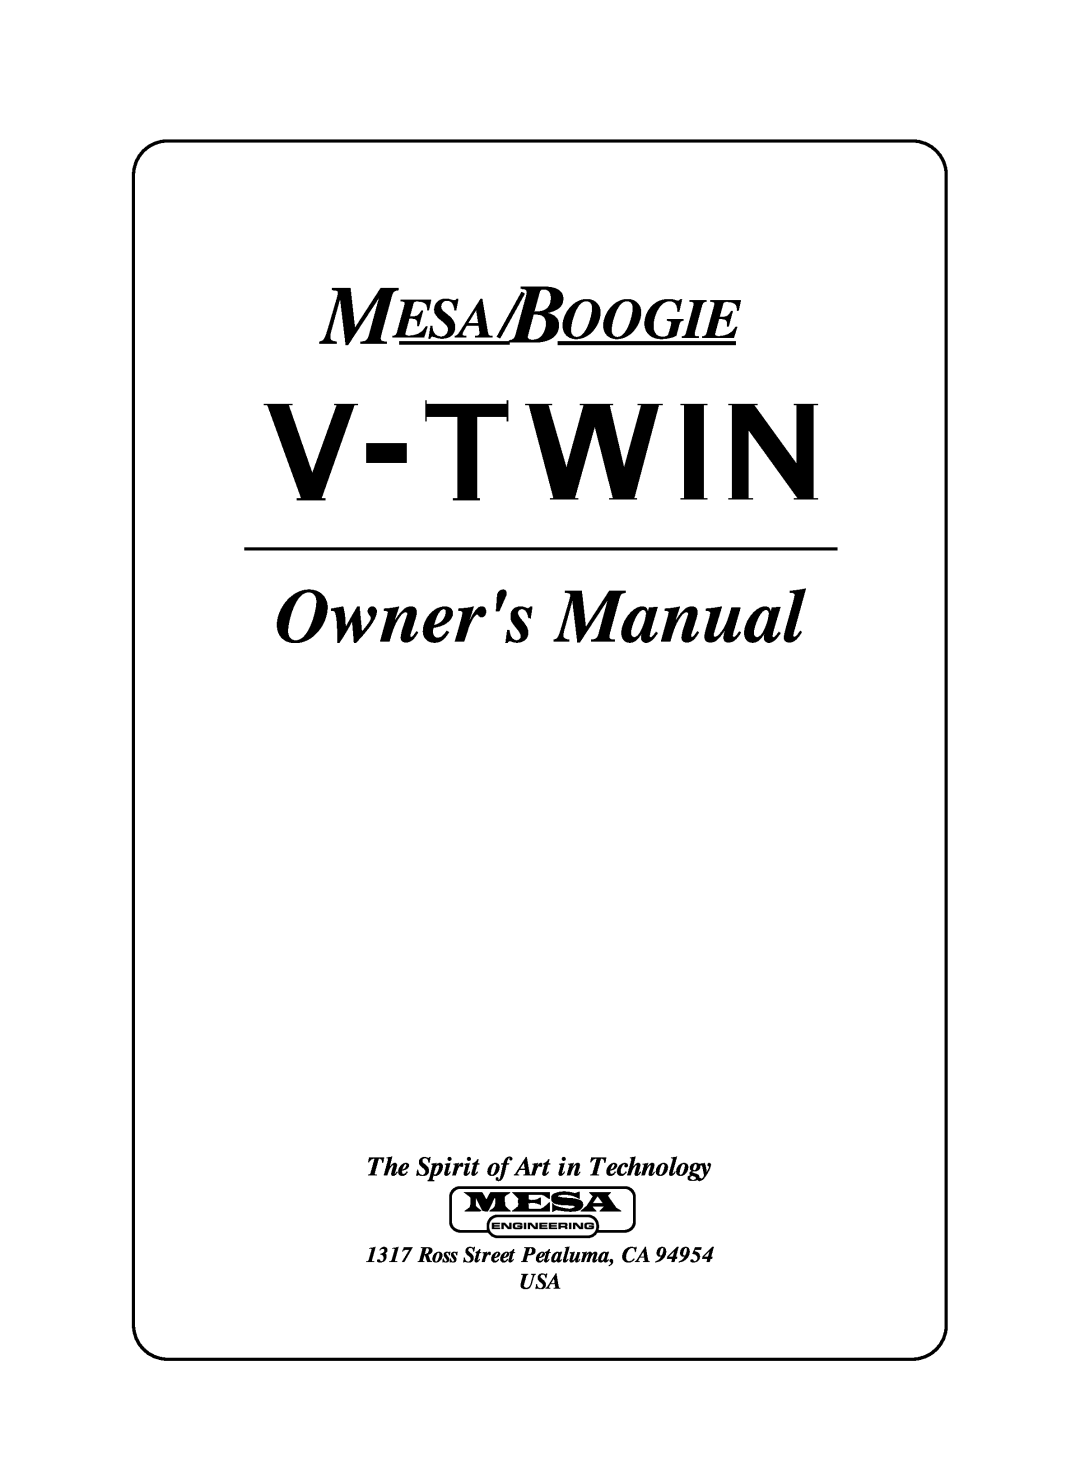 Mesa/Boogie V-TWIN owner manual The Spirit of Art in Technology, Owners Manual, Mesa Boogie, Ross Street Petaluma, CA USA 